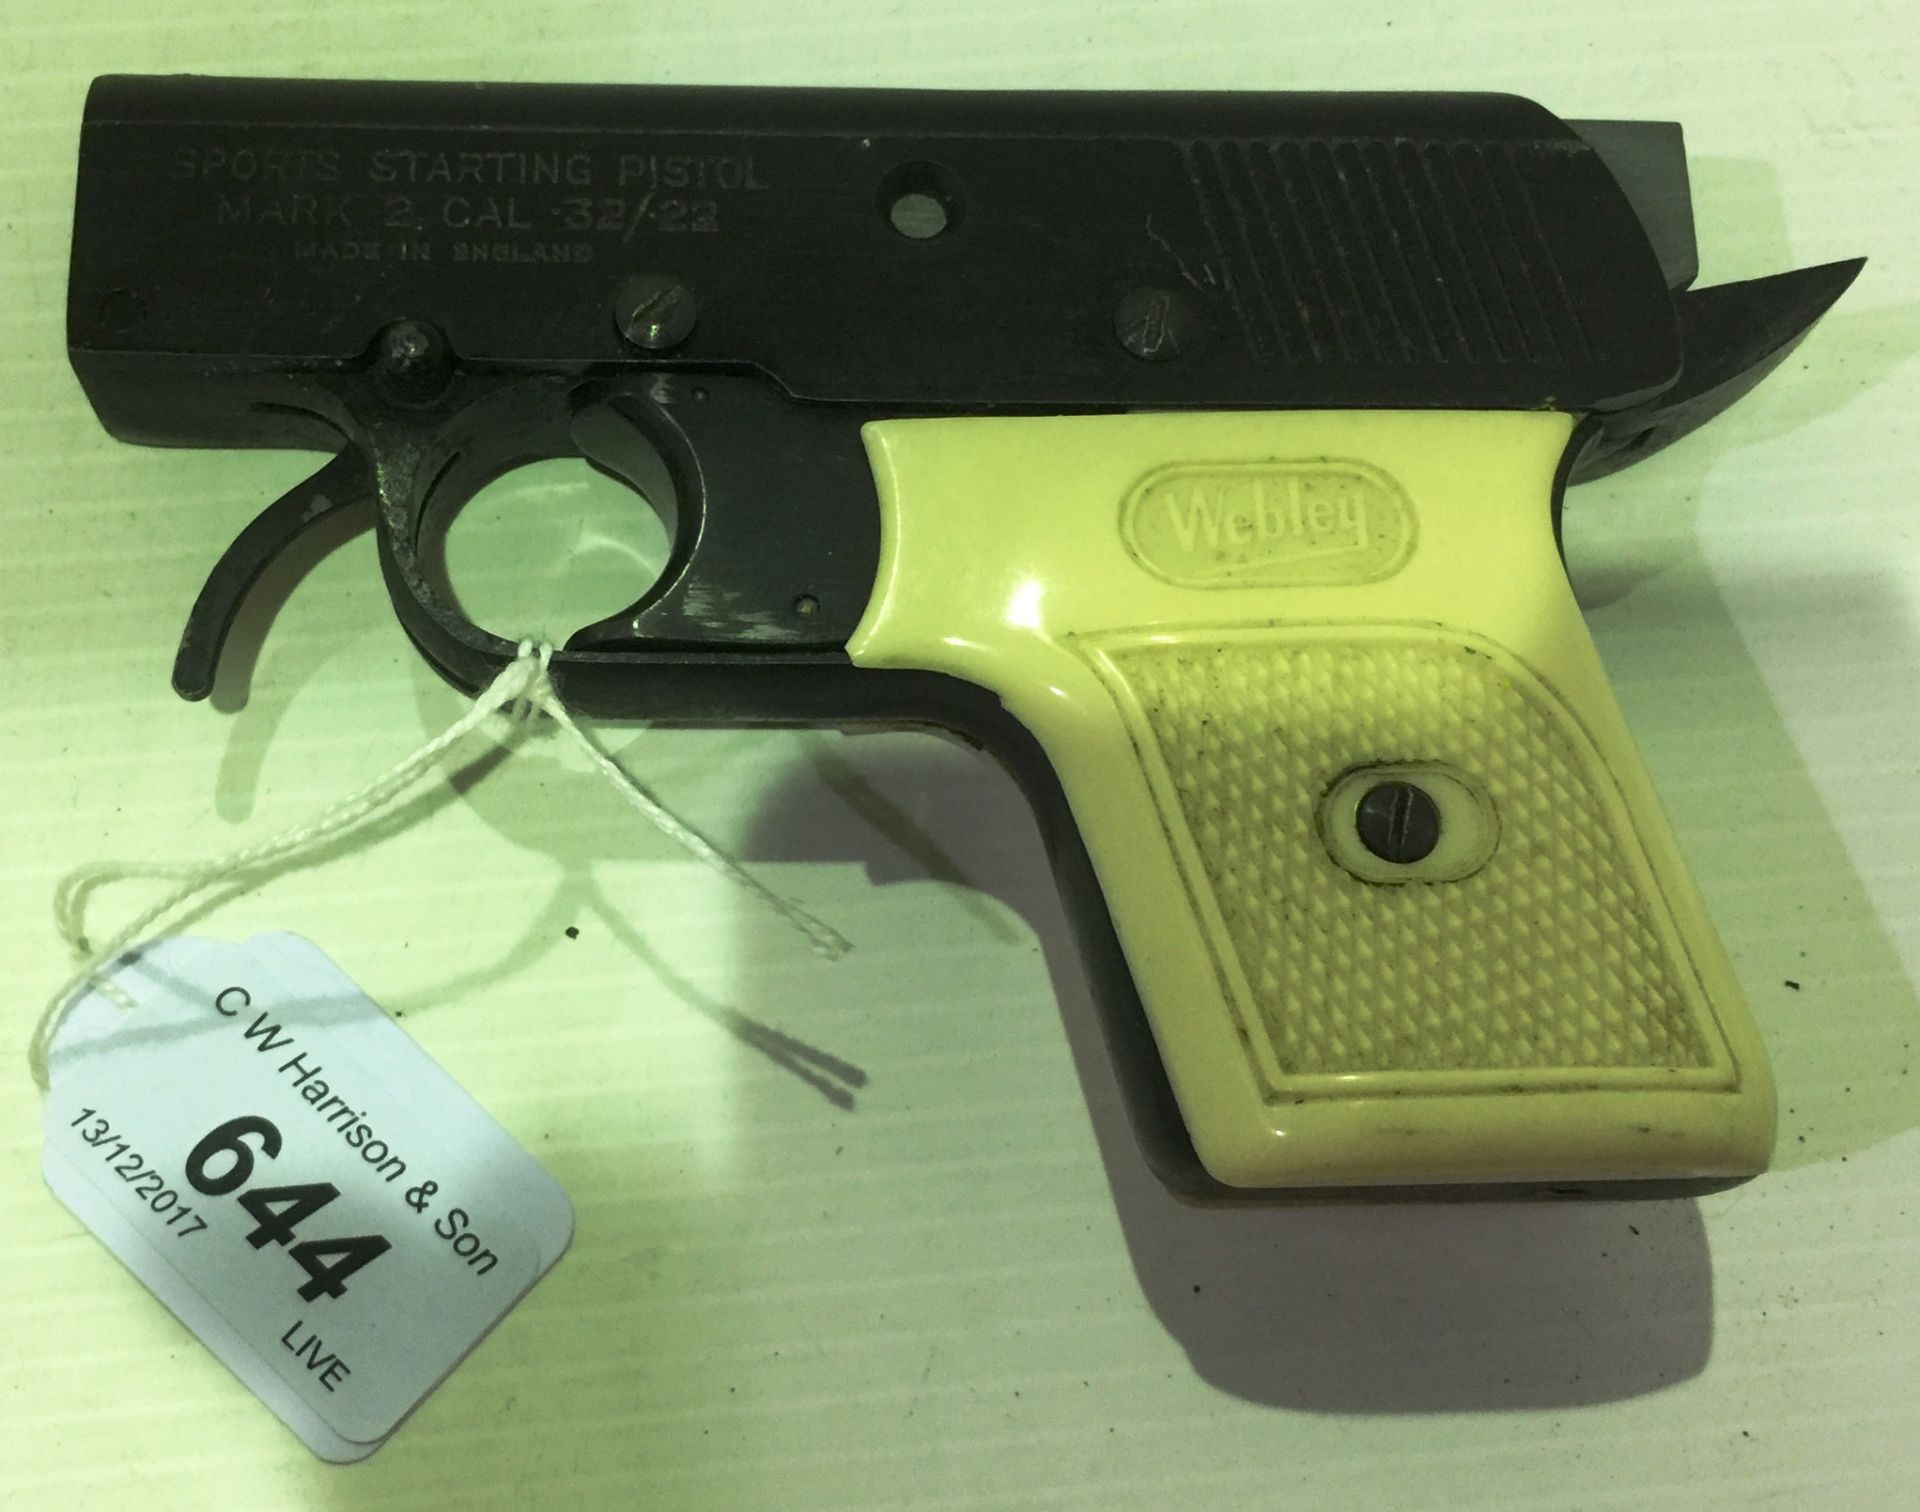 A Webley Sports starting pistol mark 2 cal .32/.